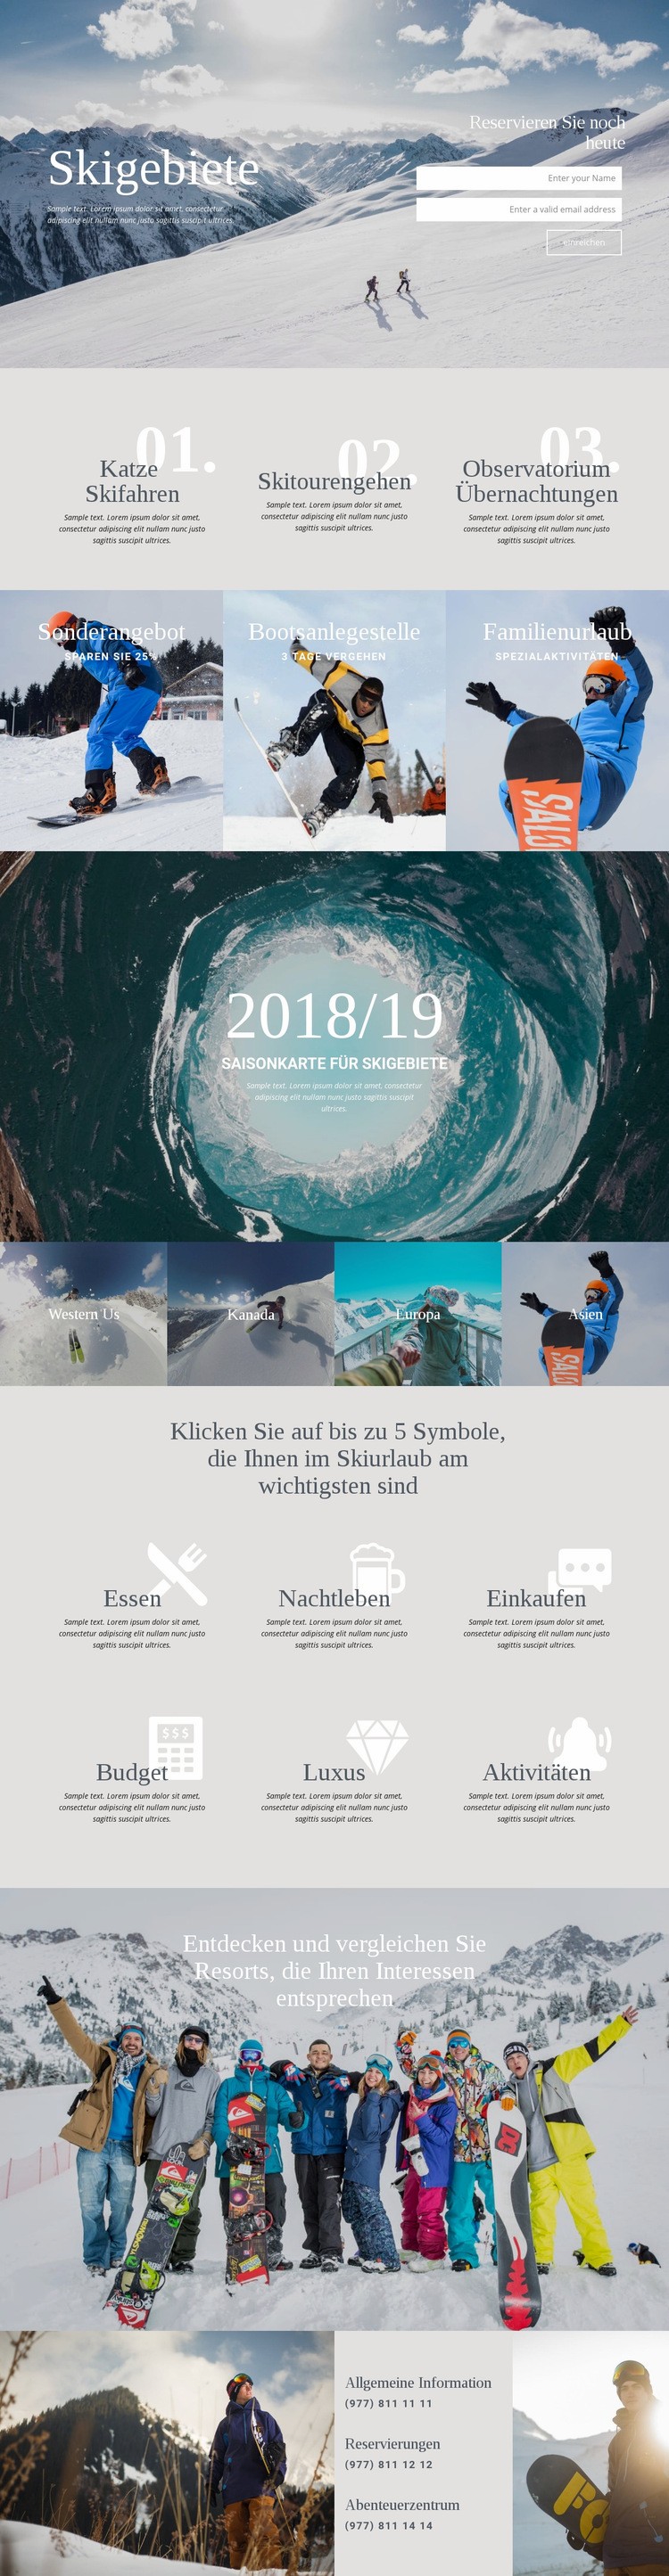 Skigebiete Website design